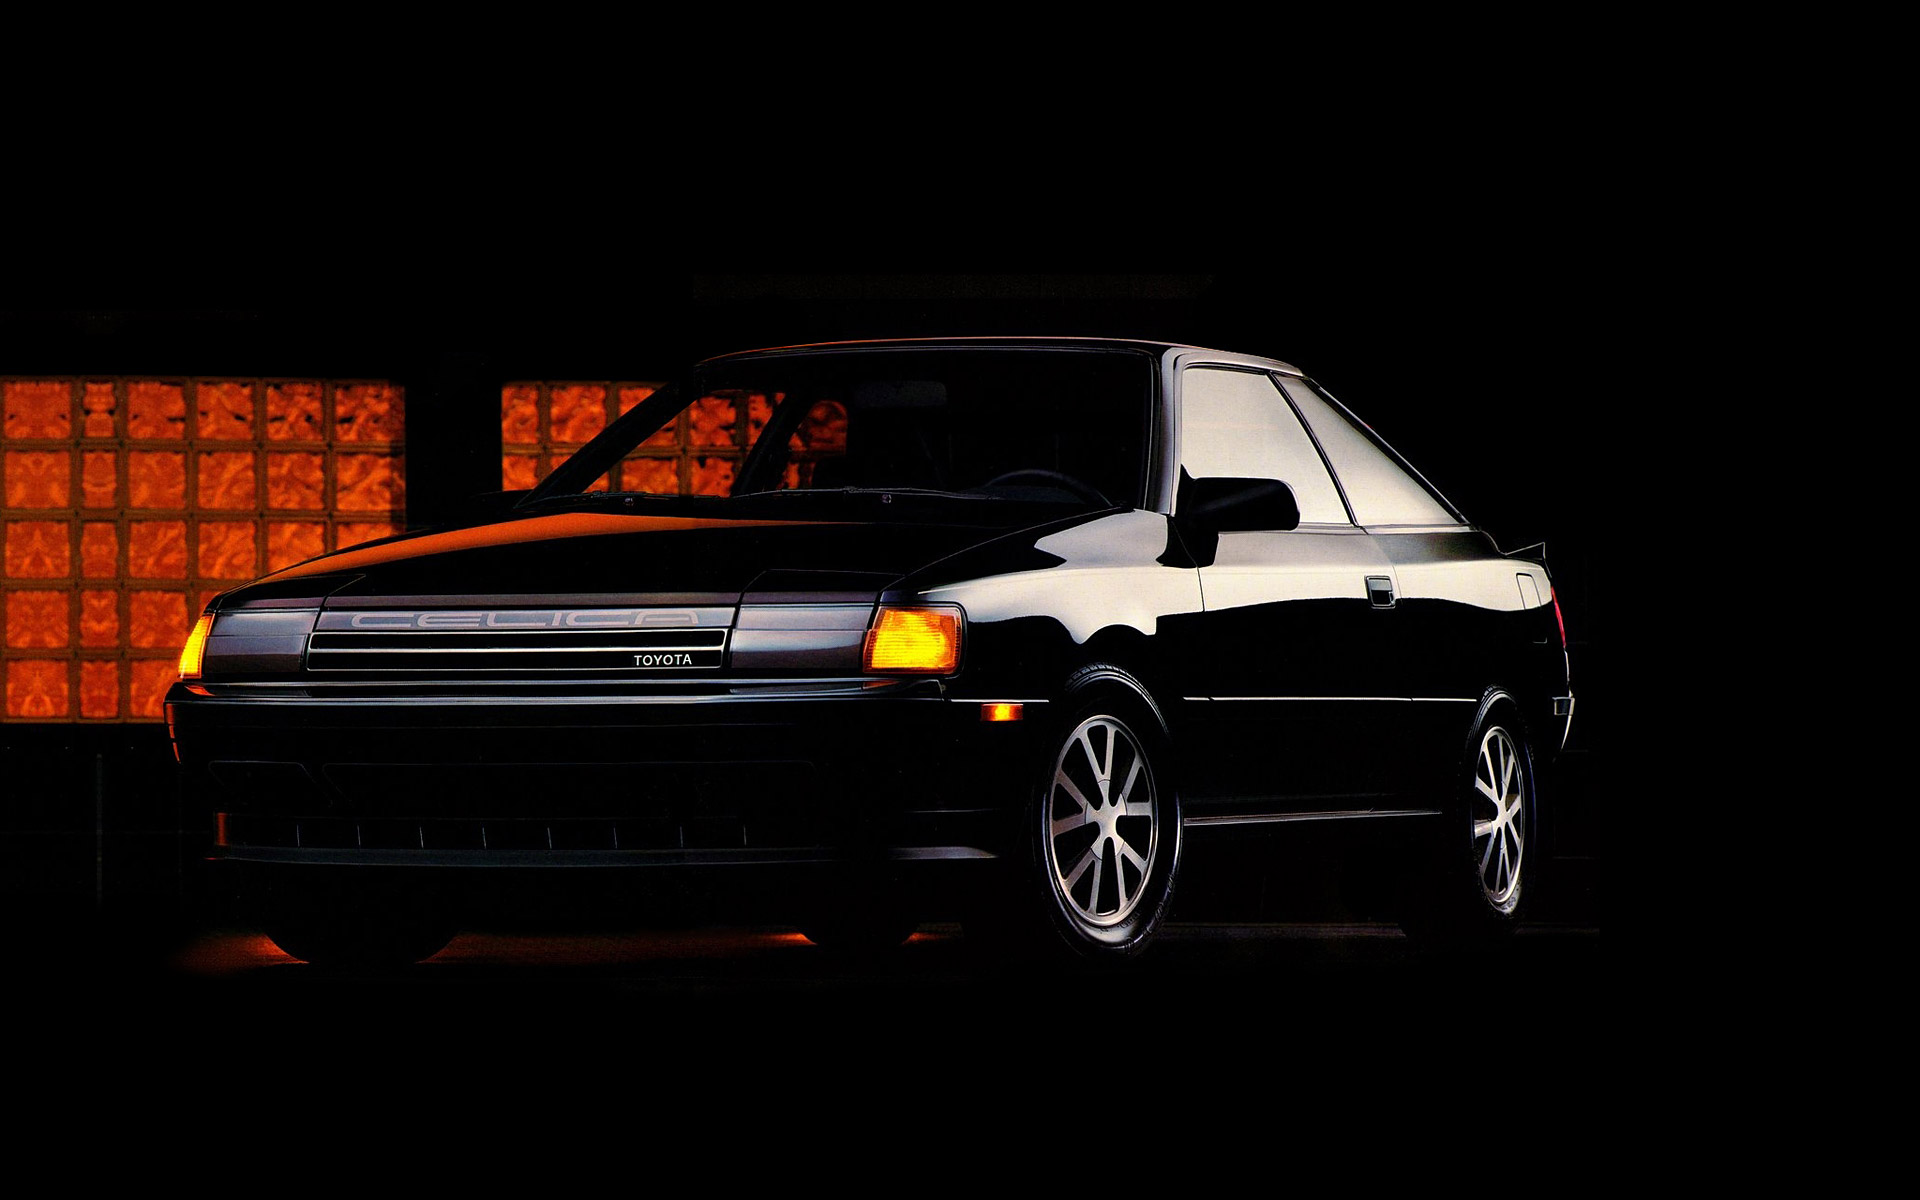  1986 Toyota Celica Wallpaper.